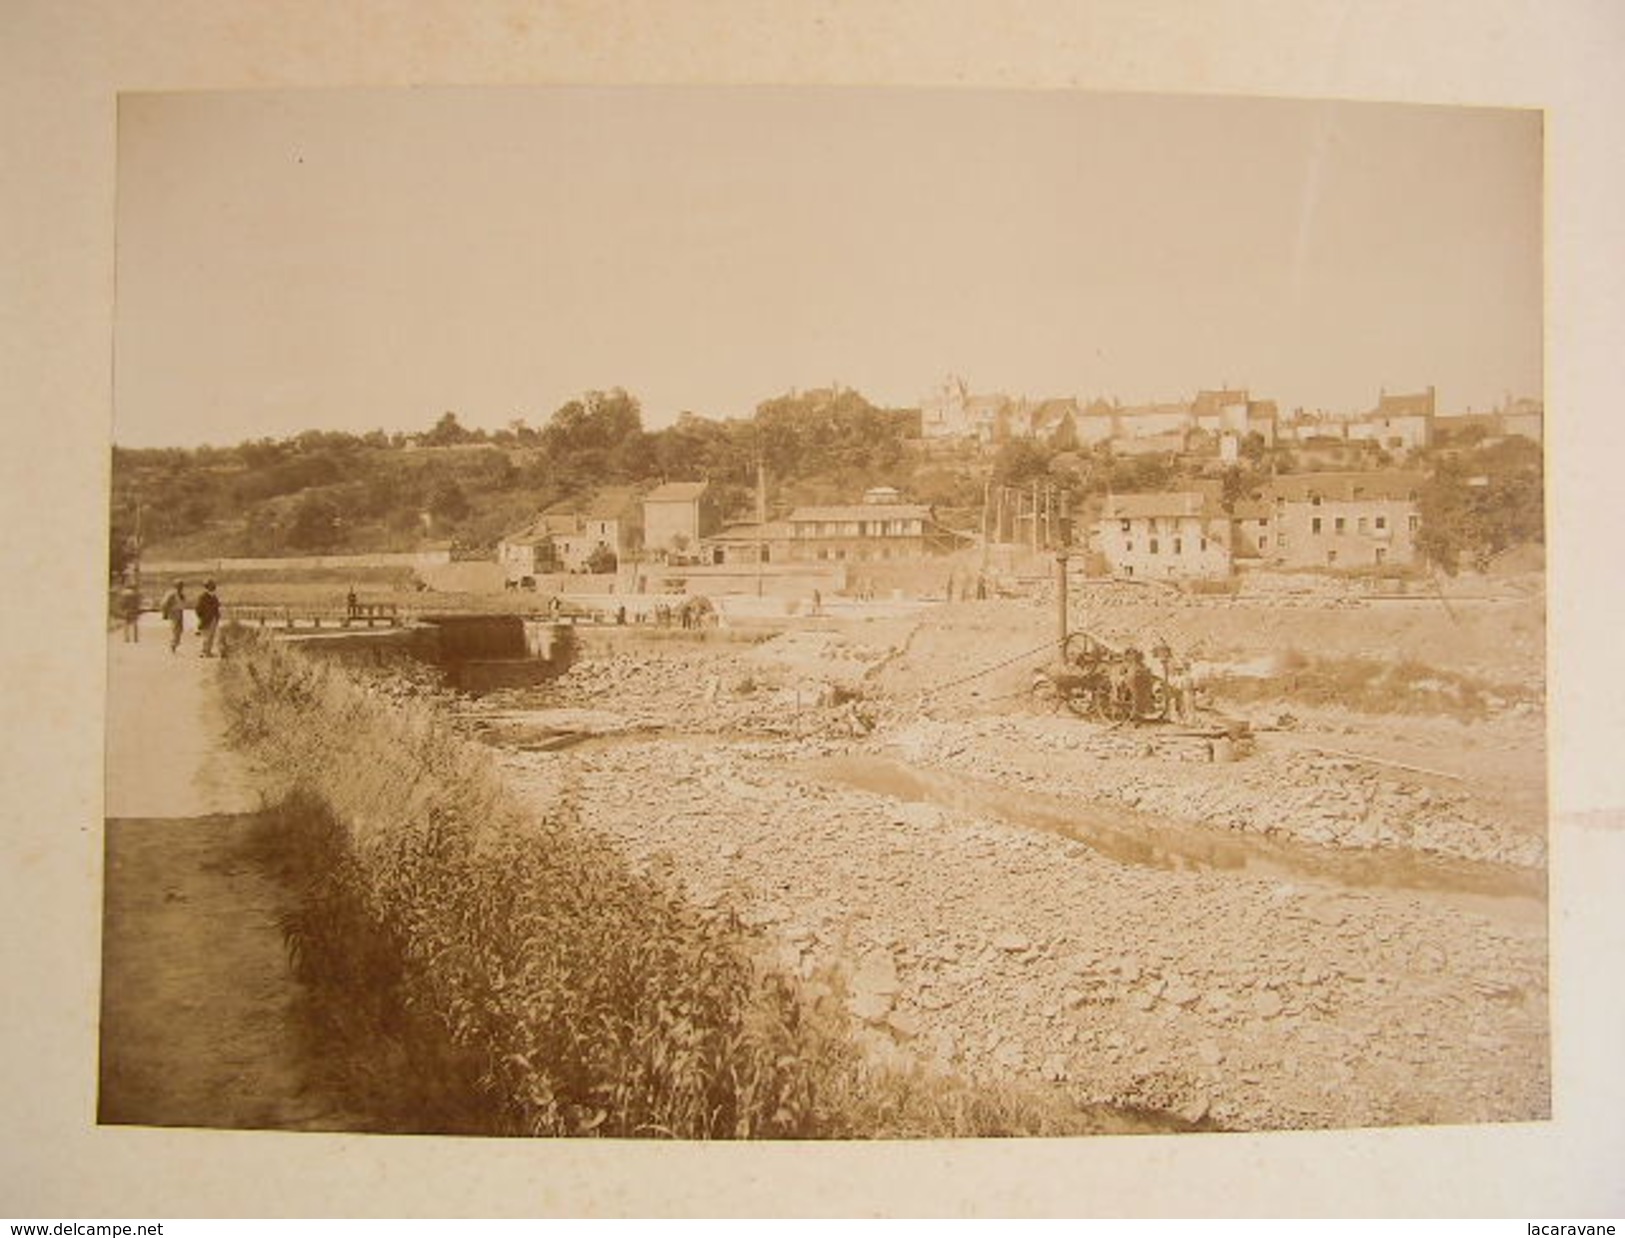 Photographie Photo Cpa Travaux Canal Roanne Briare Freycinet ? Ouvriers Machine A Vapeur Grand Format 38cm X 27cm - Anciennes (Av. 1900)